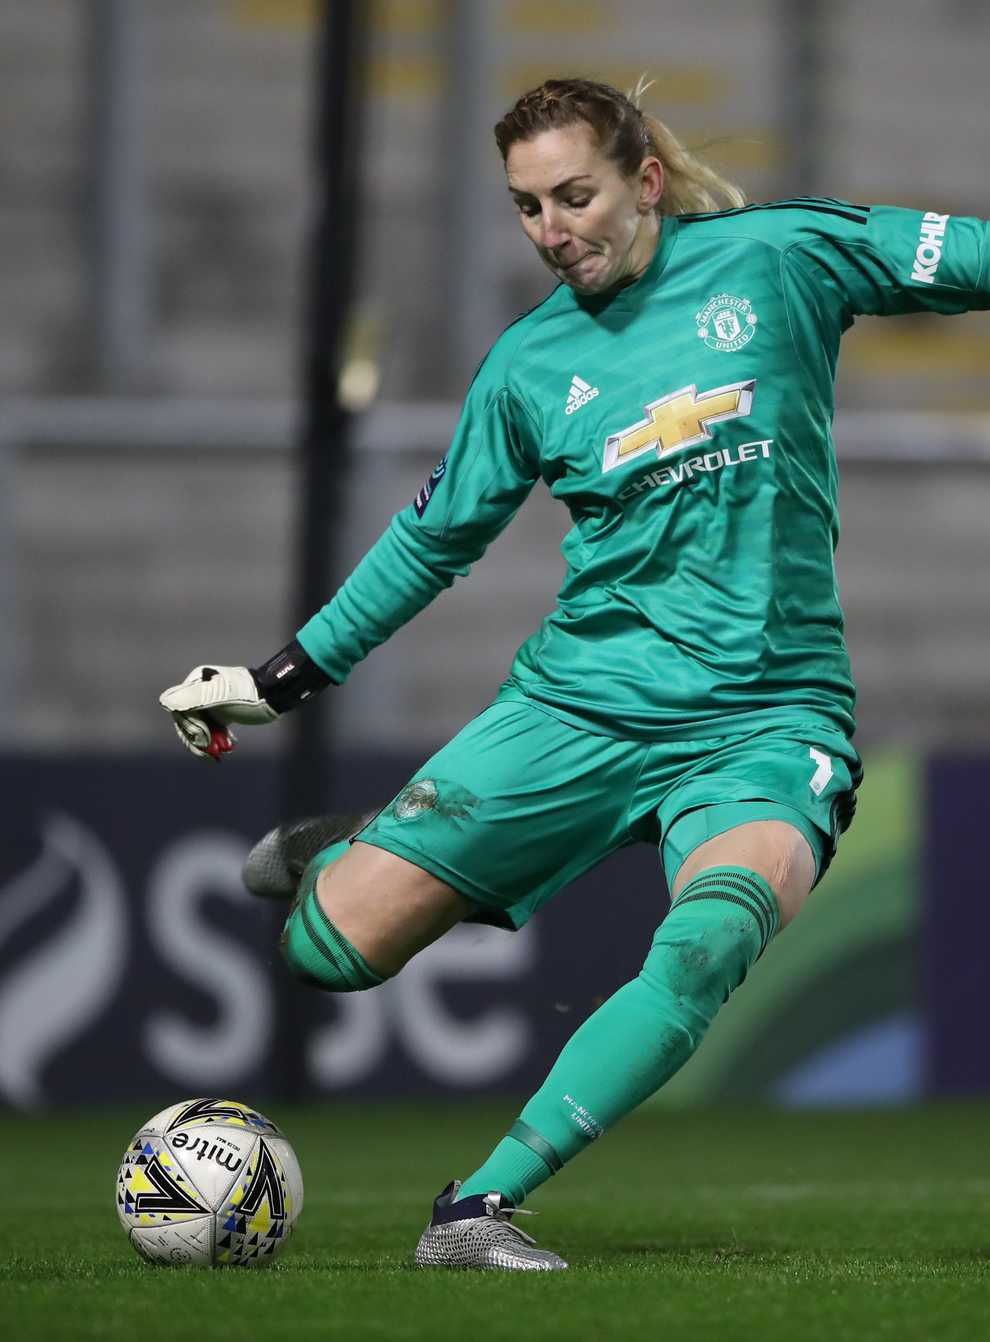 Manchester United's goalkeeper Siobhan Chamberlain